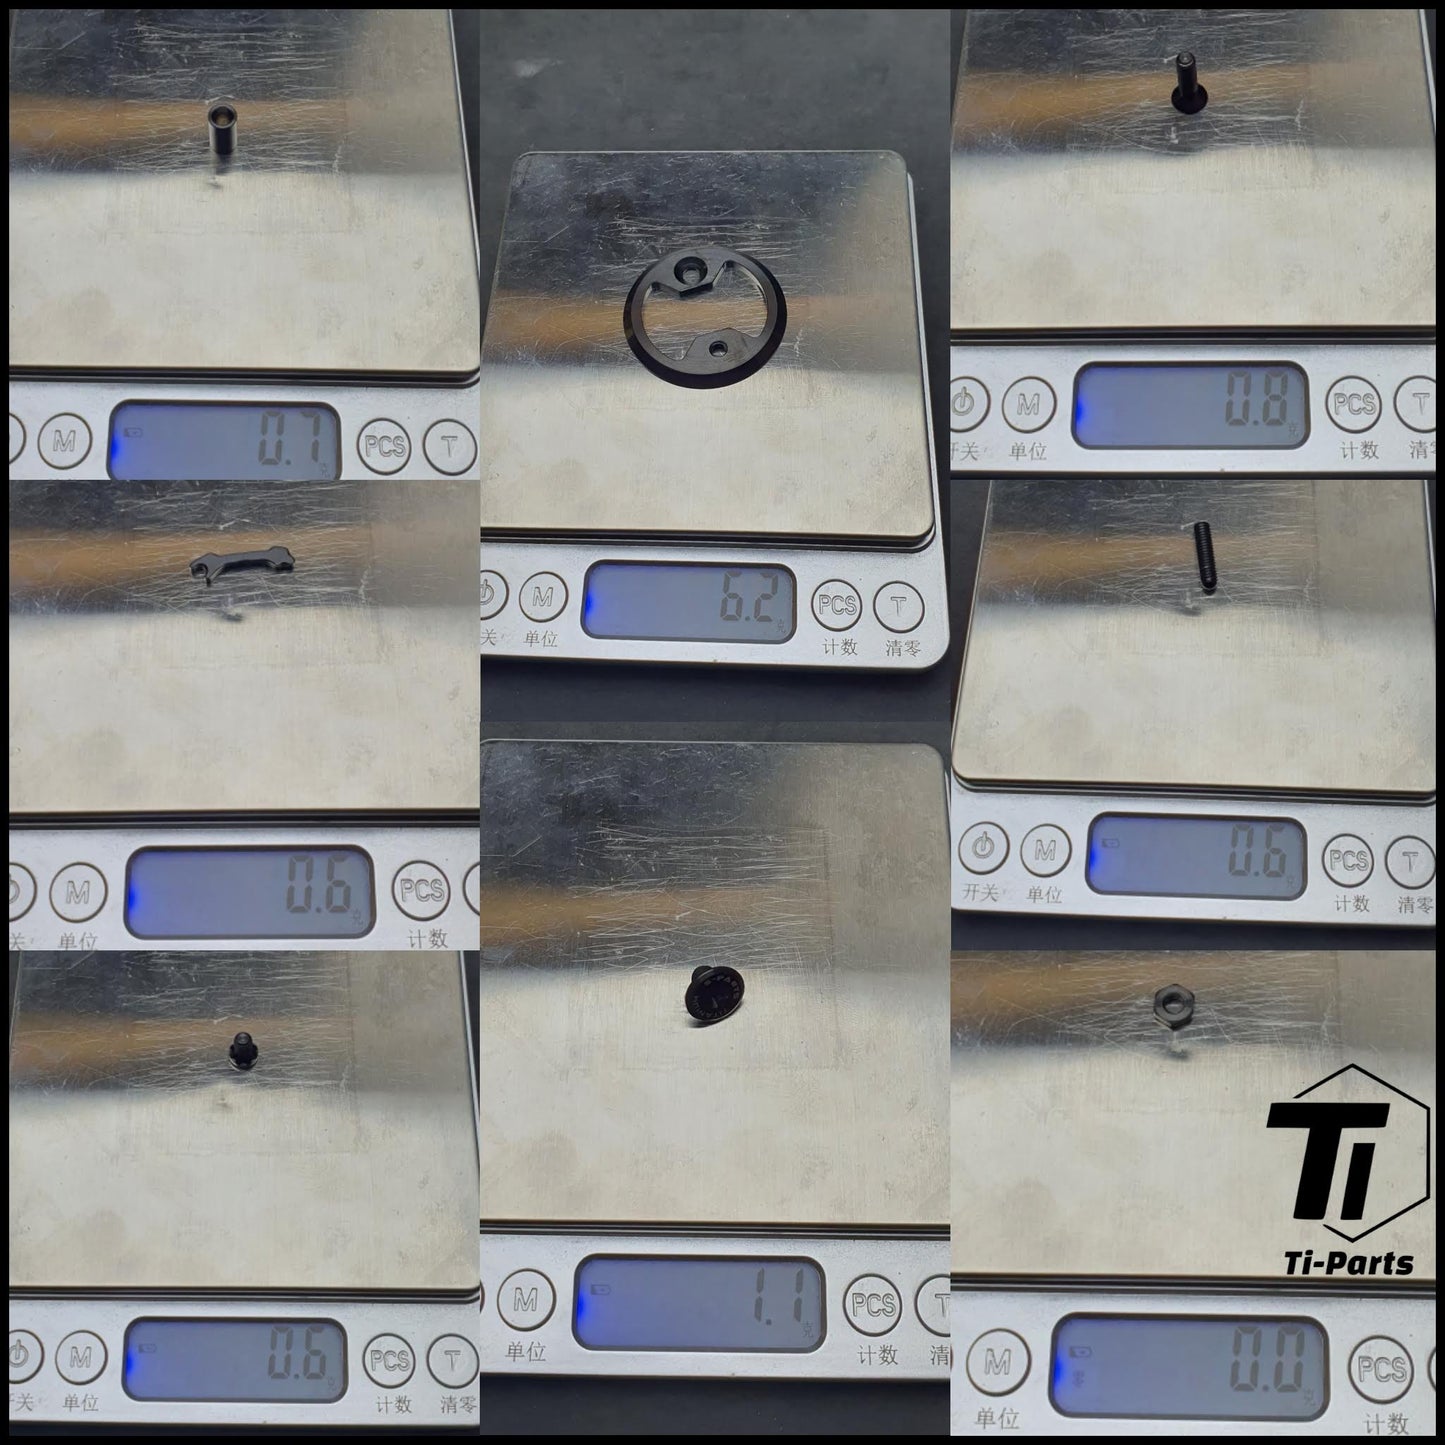 Titanium Wahoo SpeedPlay Upgrade Kit | Pedál Prwlink Zero Power Meter | Titanium 5. třídy Singapur